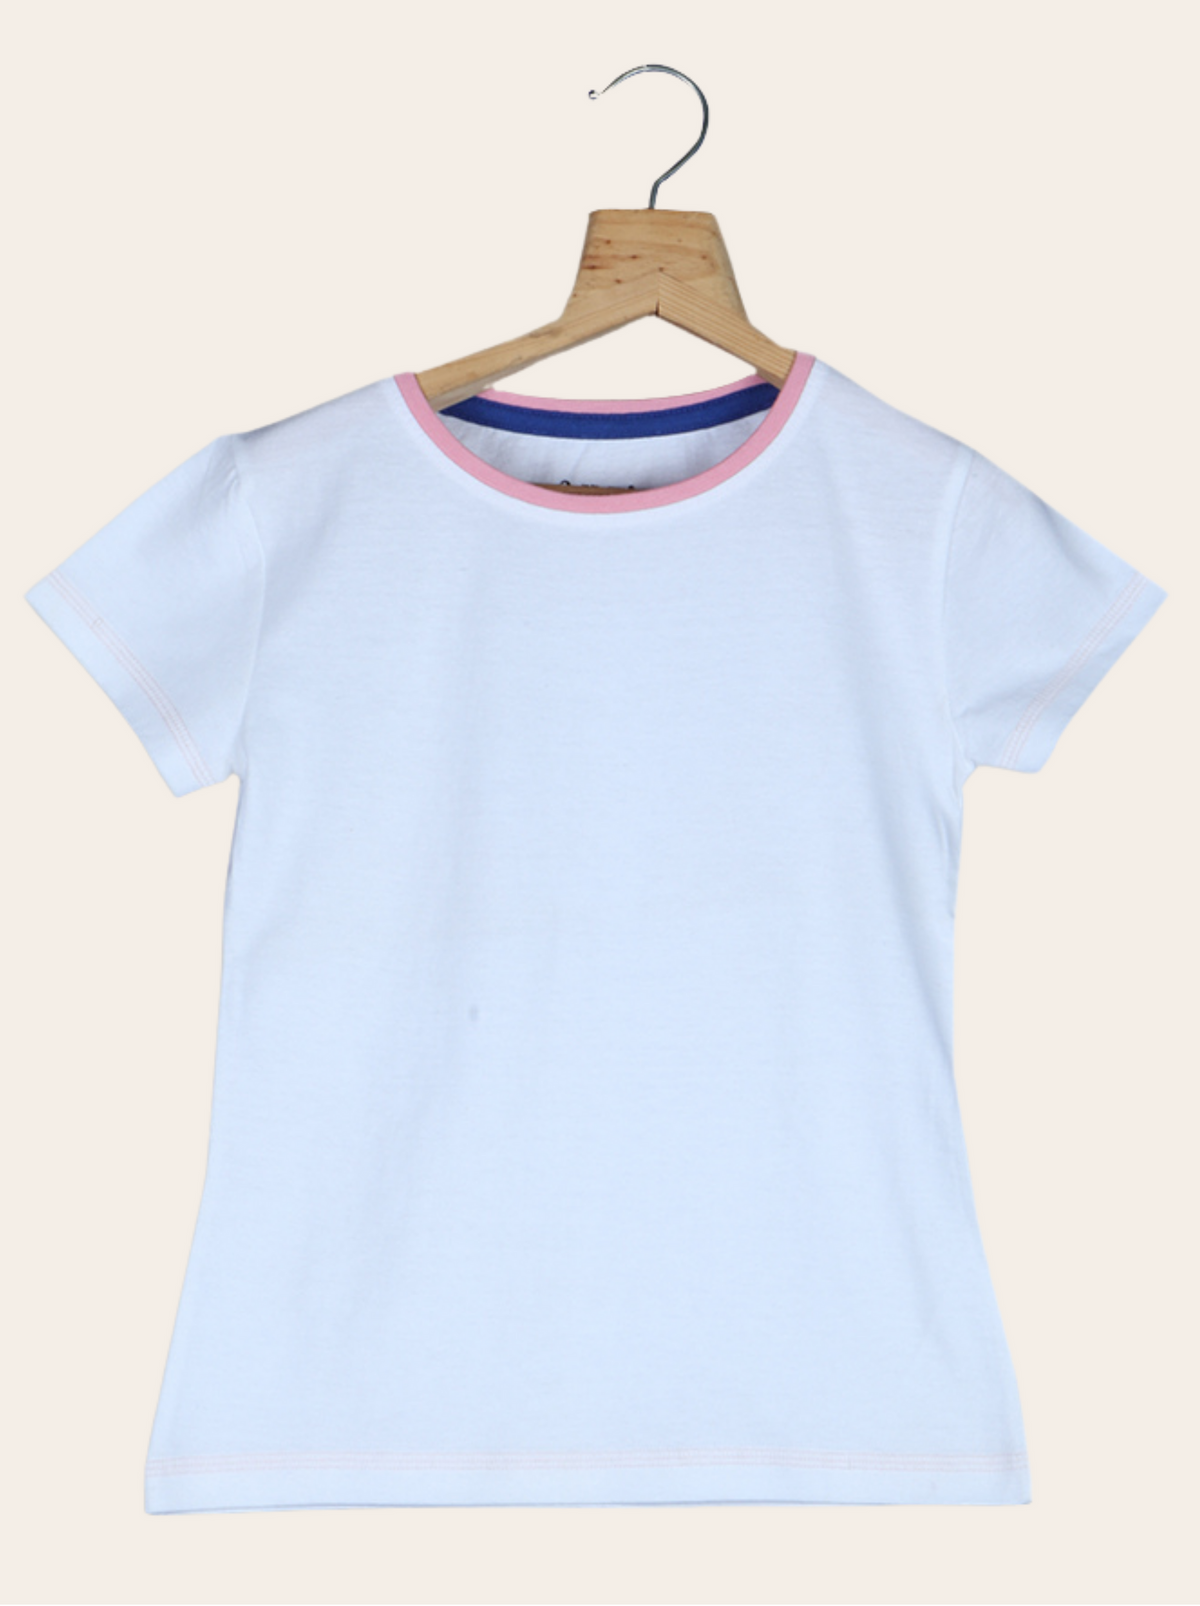 Kids White Half sleeve, Short Sleeve Solid Cotton jersey knit, Single Jersey T-Shirt